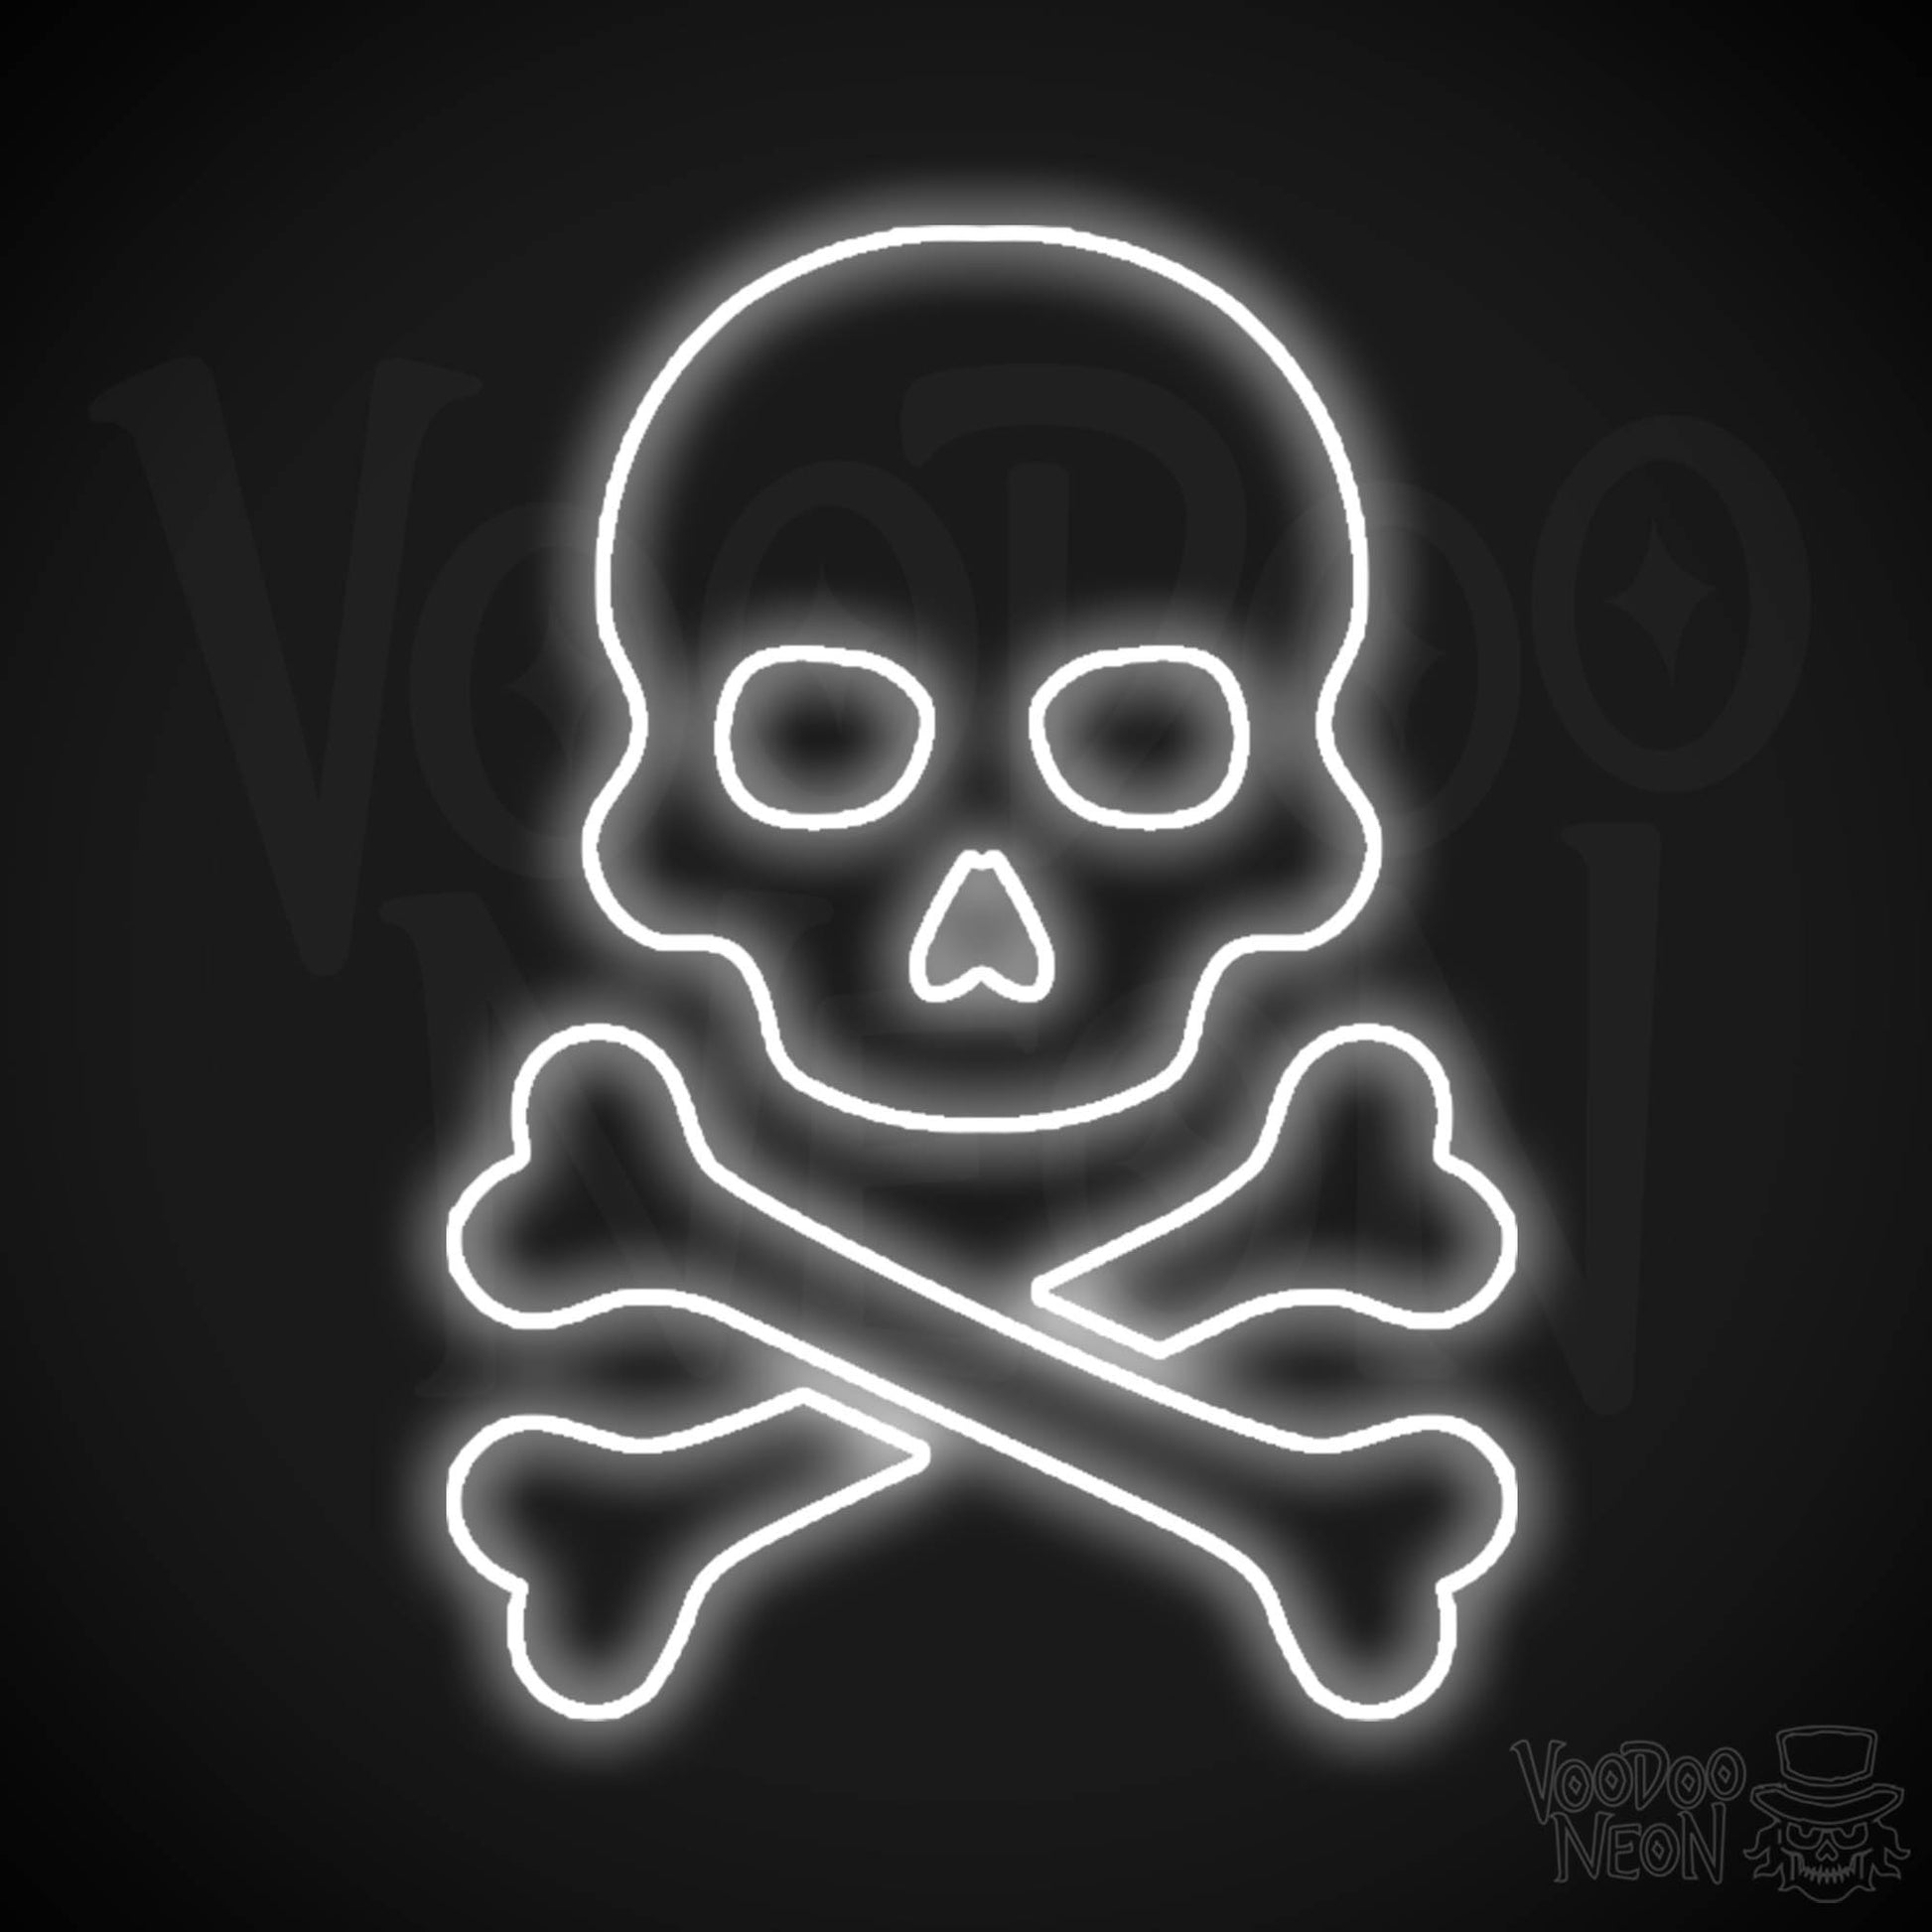 Pirate Skull & Crossbones Neon Sign - Neon Pirate Skull & Crossbones Sign - LED Lights - Color White